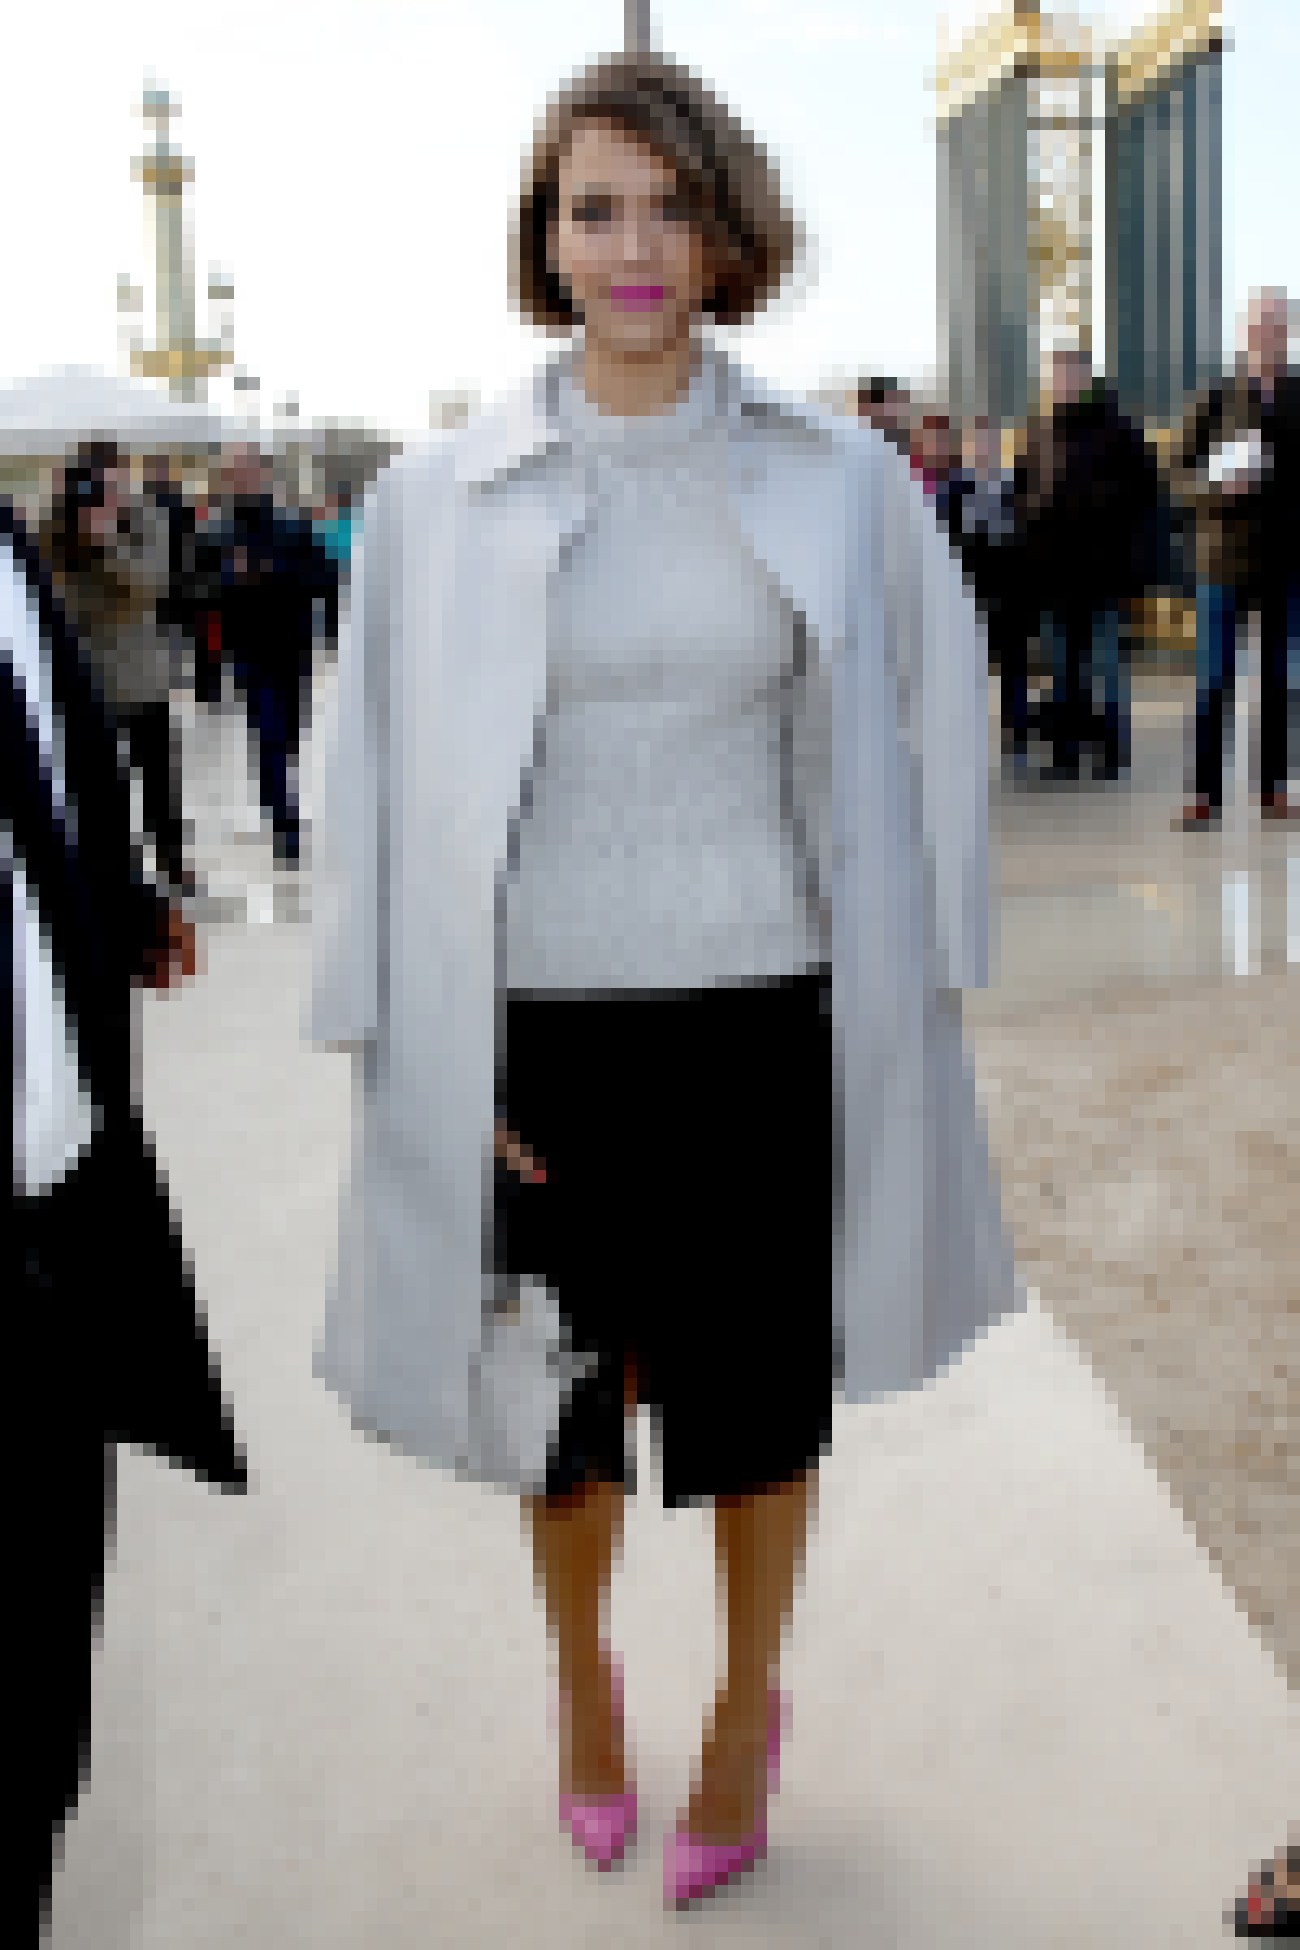 Nina Ricci : Outside Arrivals - Paris Fashion Week Womenswear Fall/Winter 2014-2015